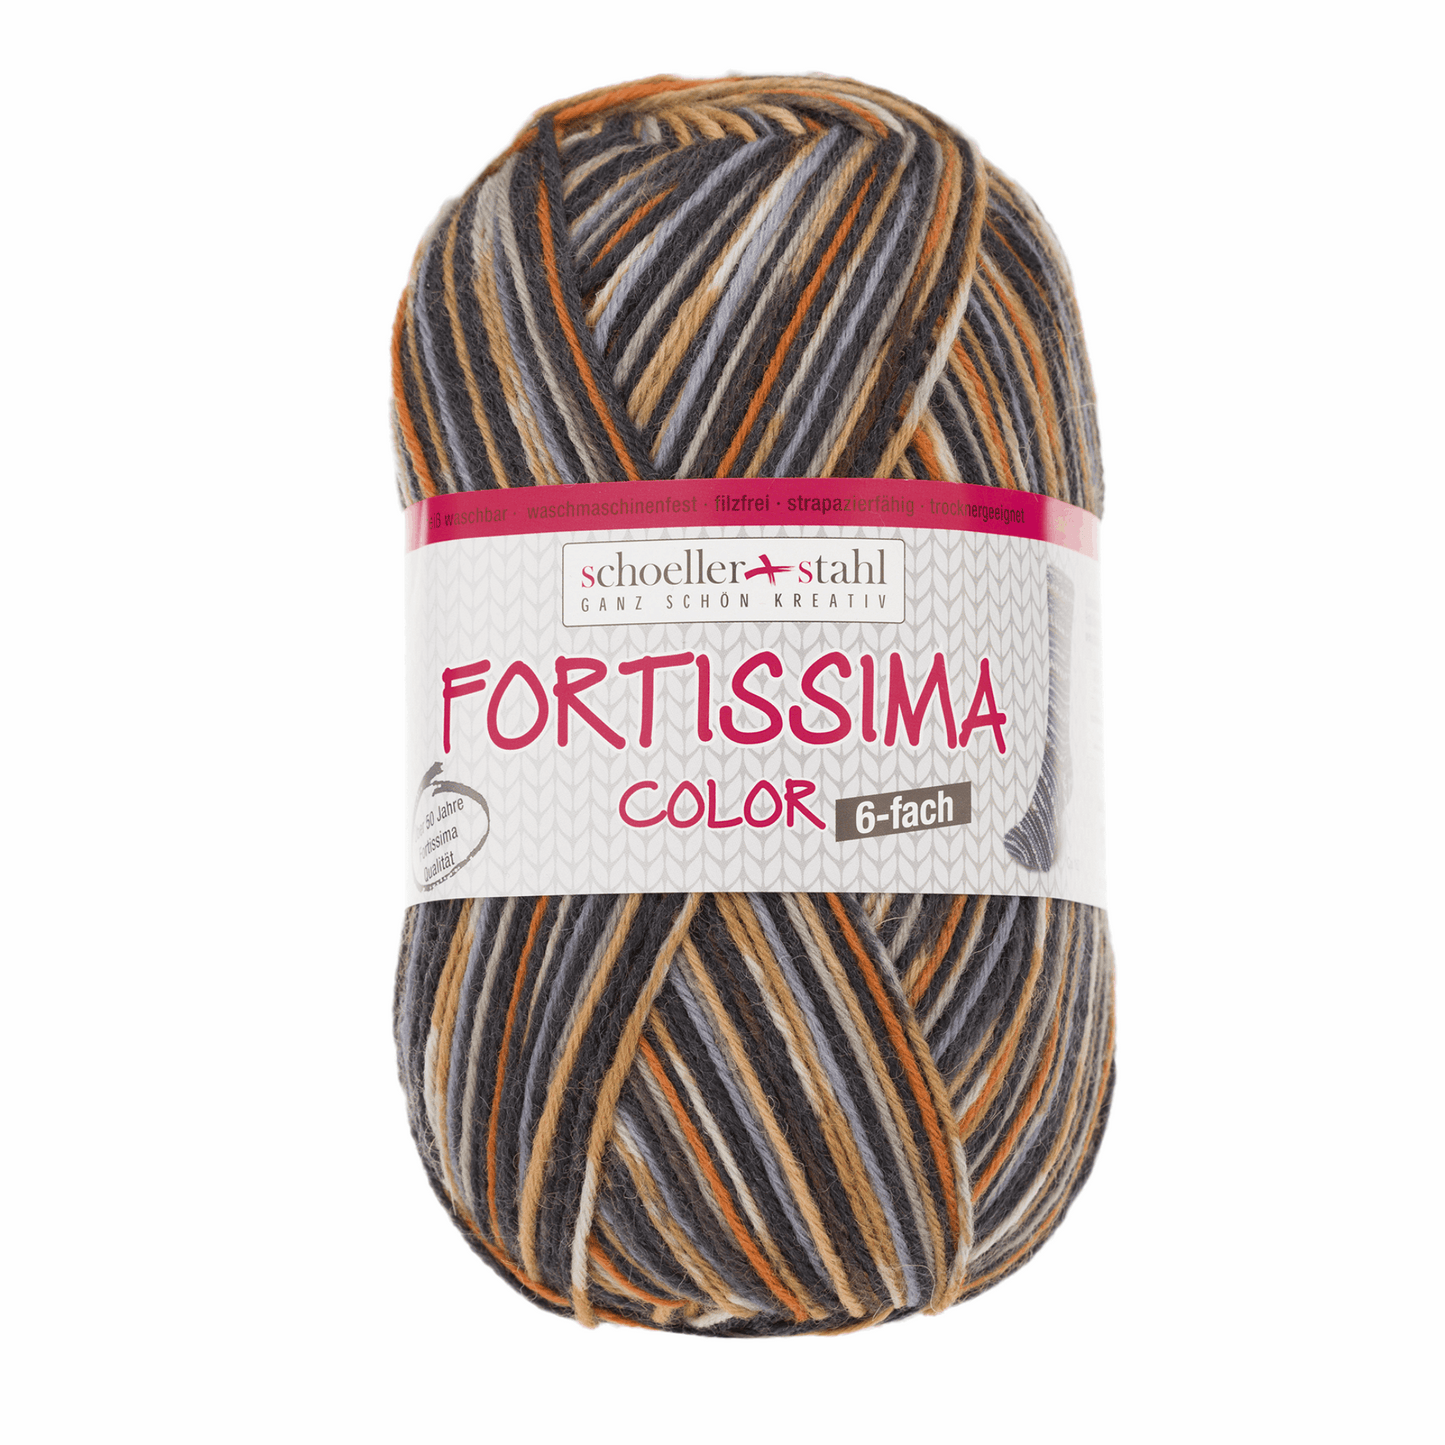 Fortissima 6fädig 150g color, 90008, Farbe 162, braun-bunt